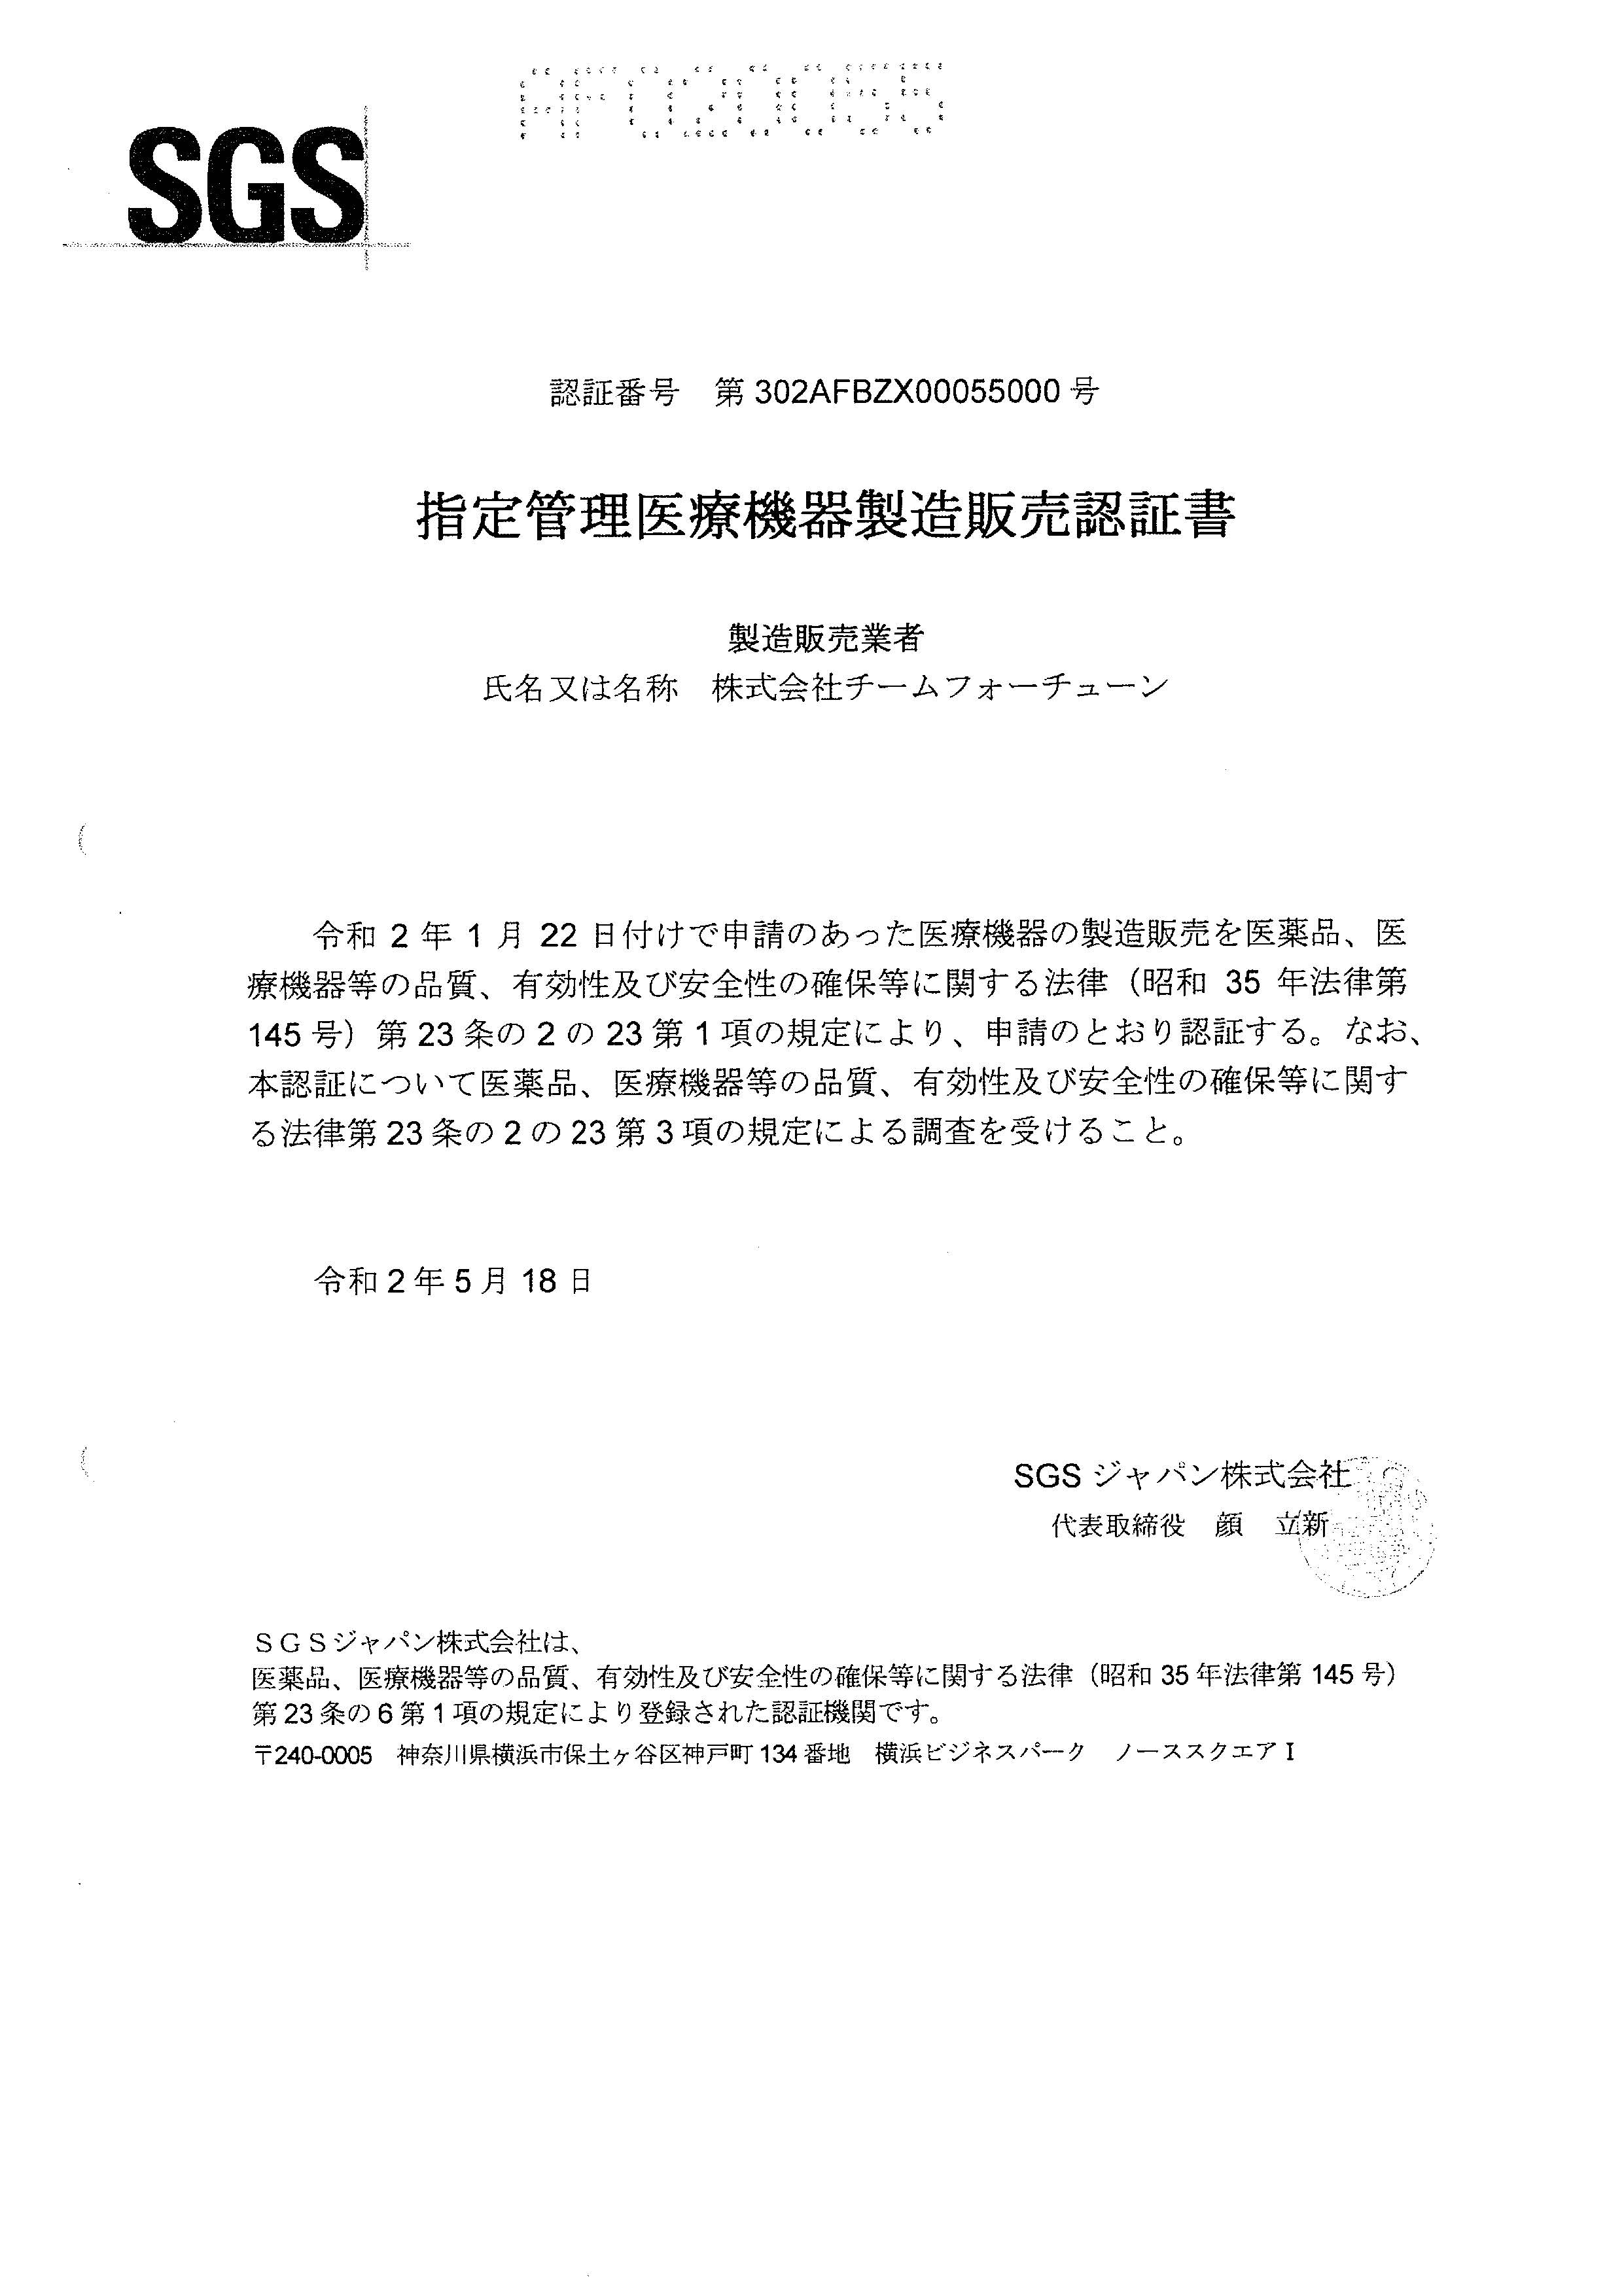 JinDELL JAPAN SGS Certificate